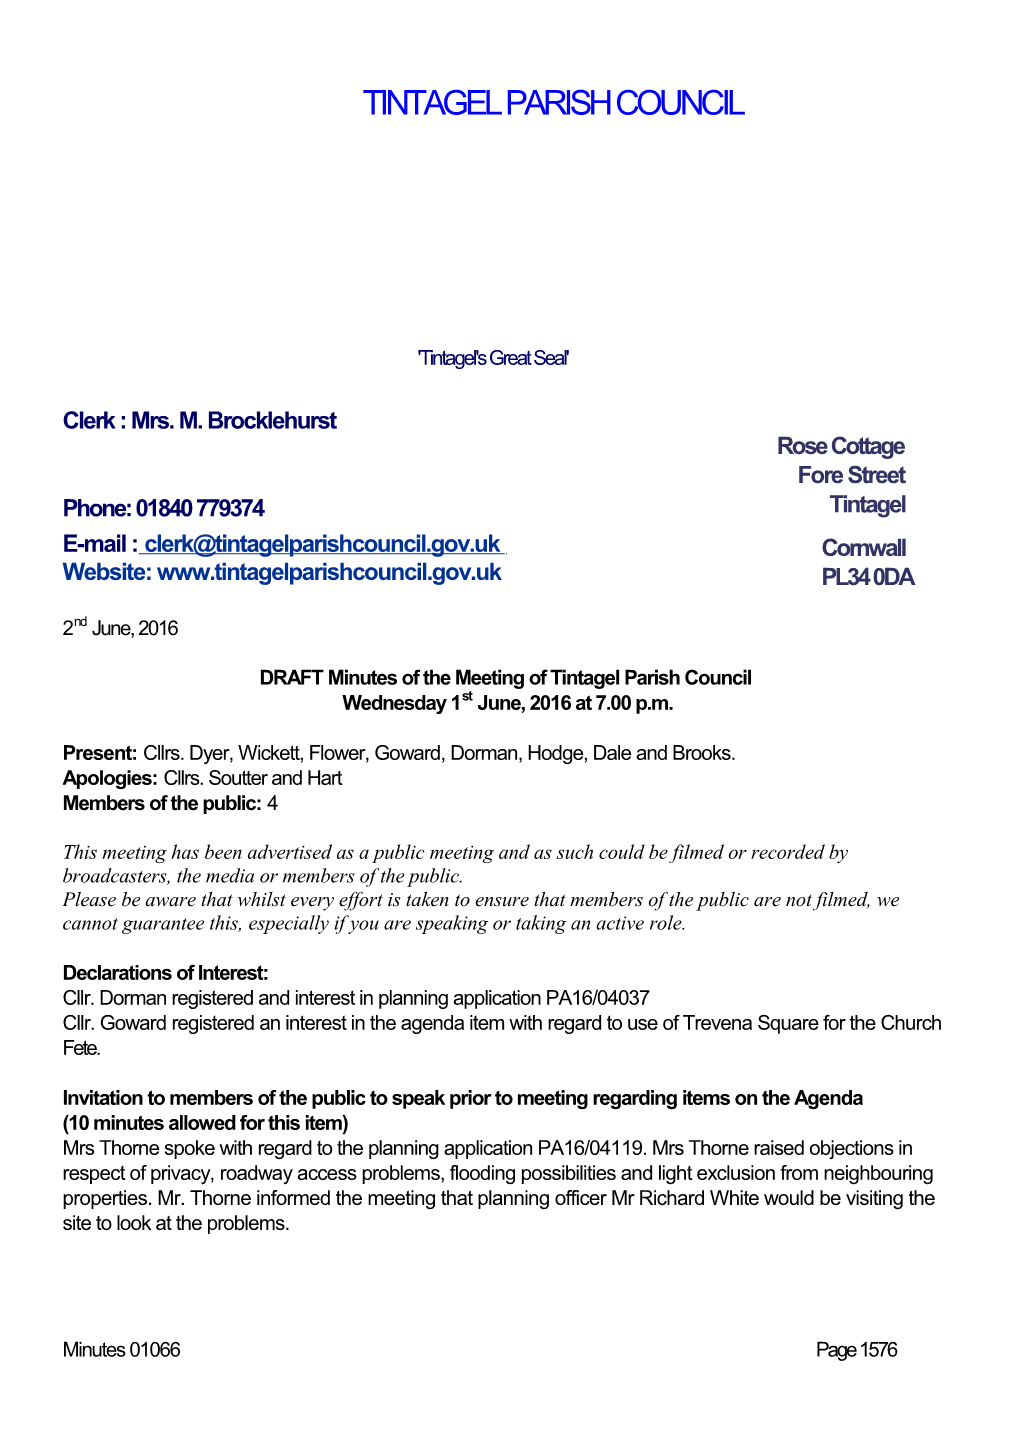 DRAFT Minutes of the Meeting of Tintagel Parish Council